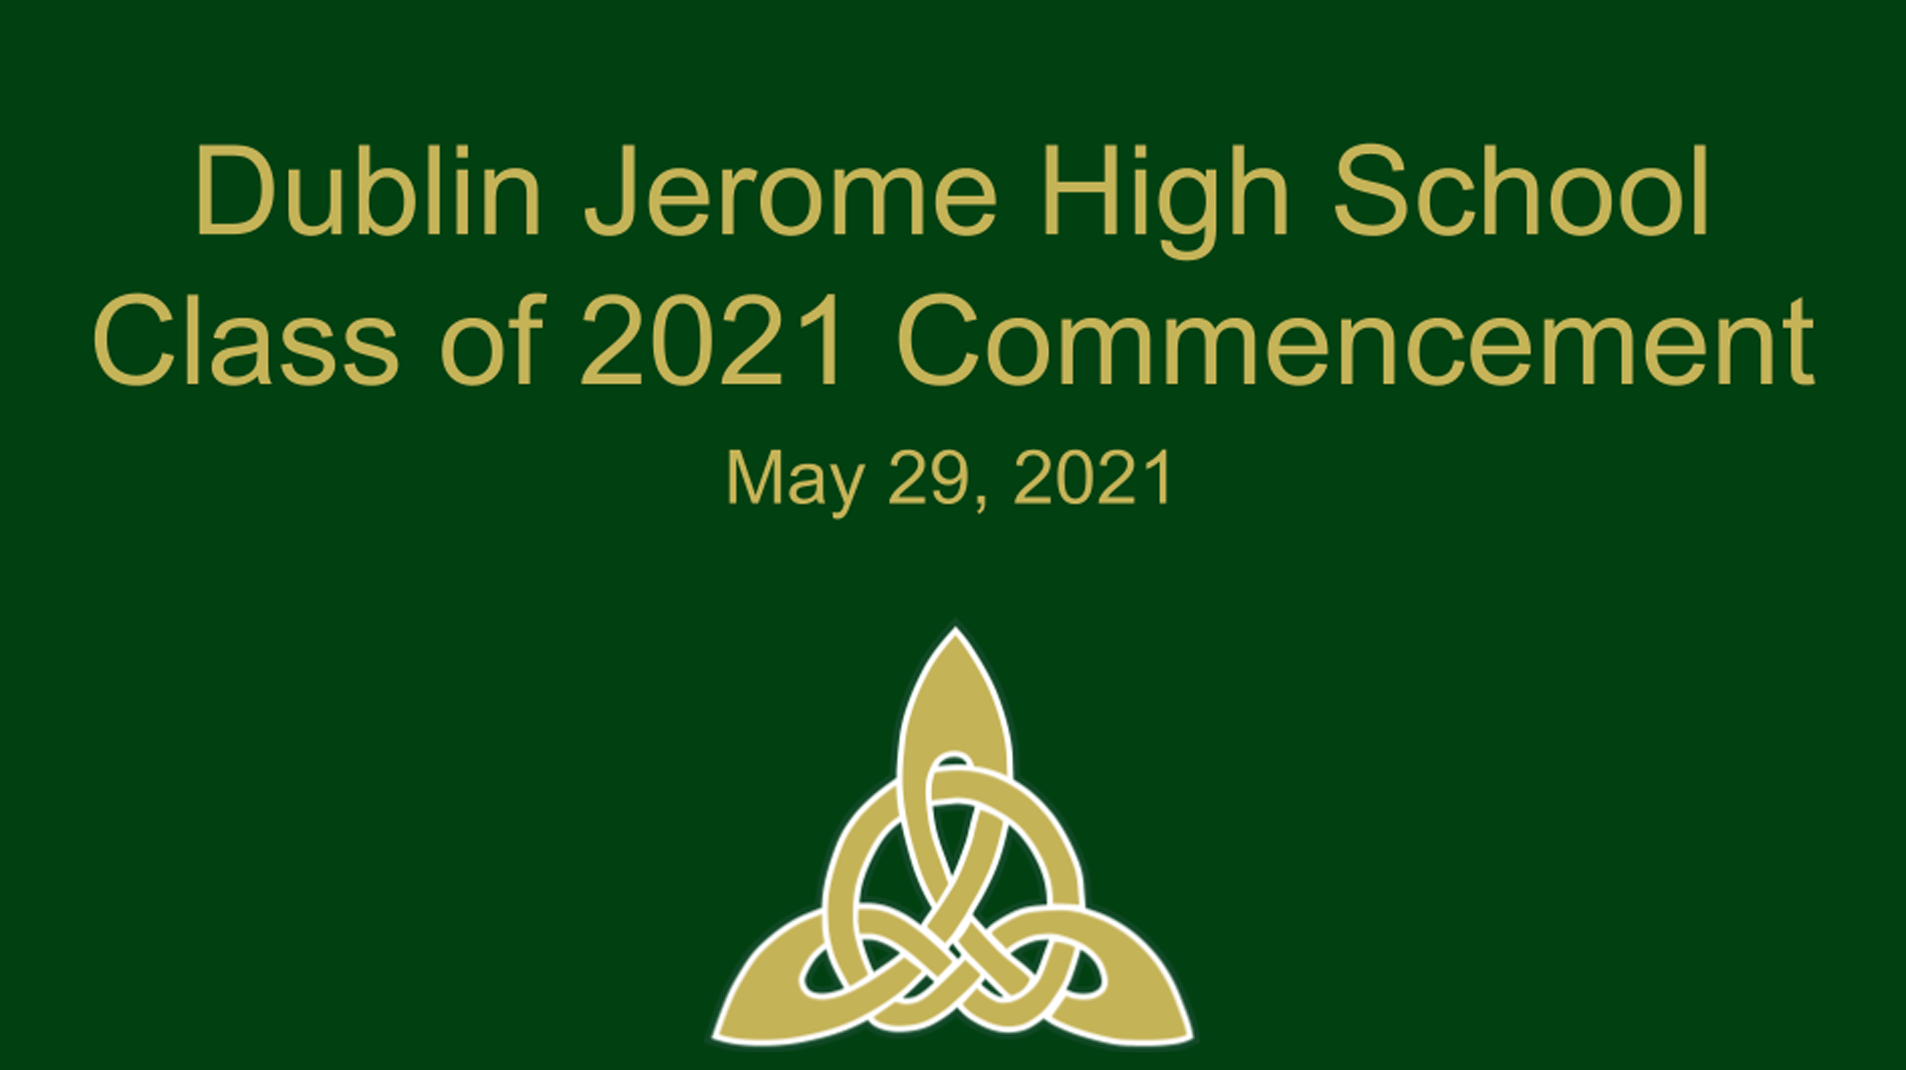 Dublin Jerome High School Class of 2021 Commencement on Livestream